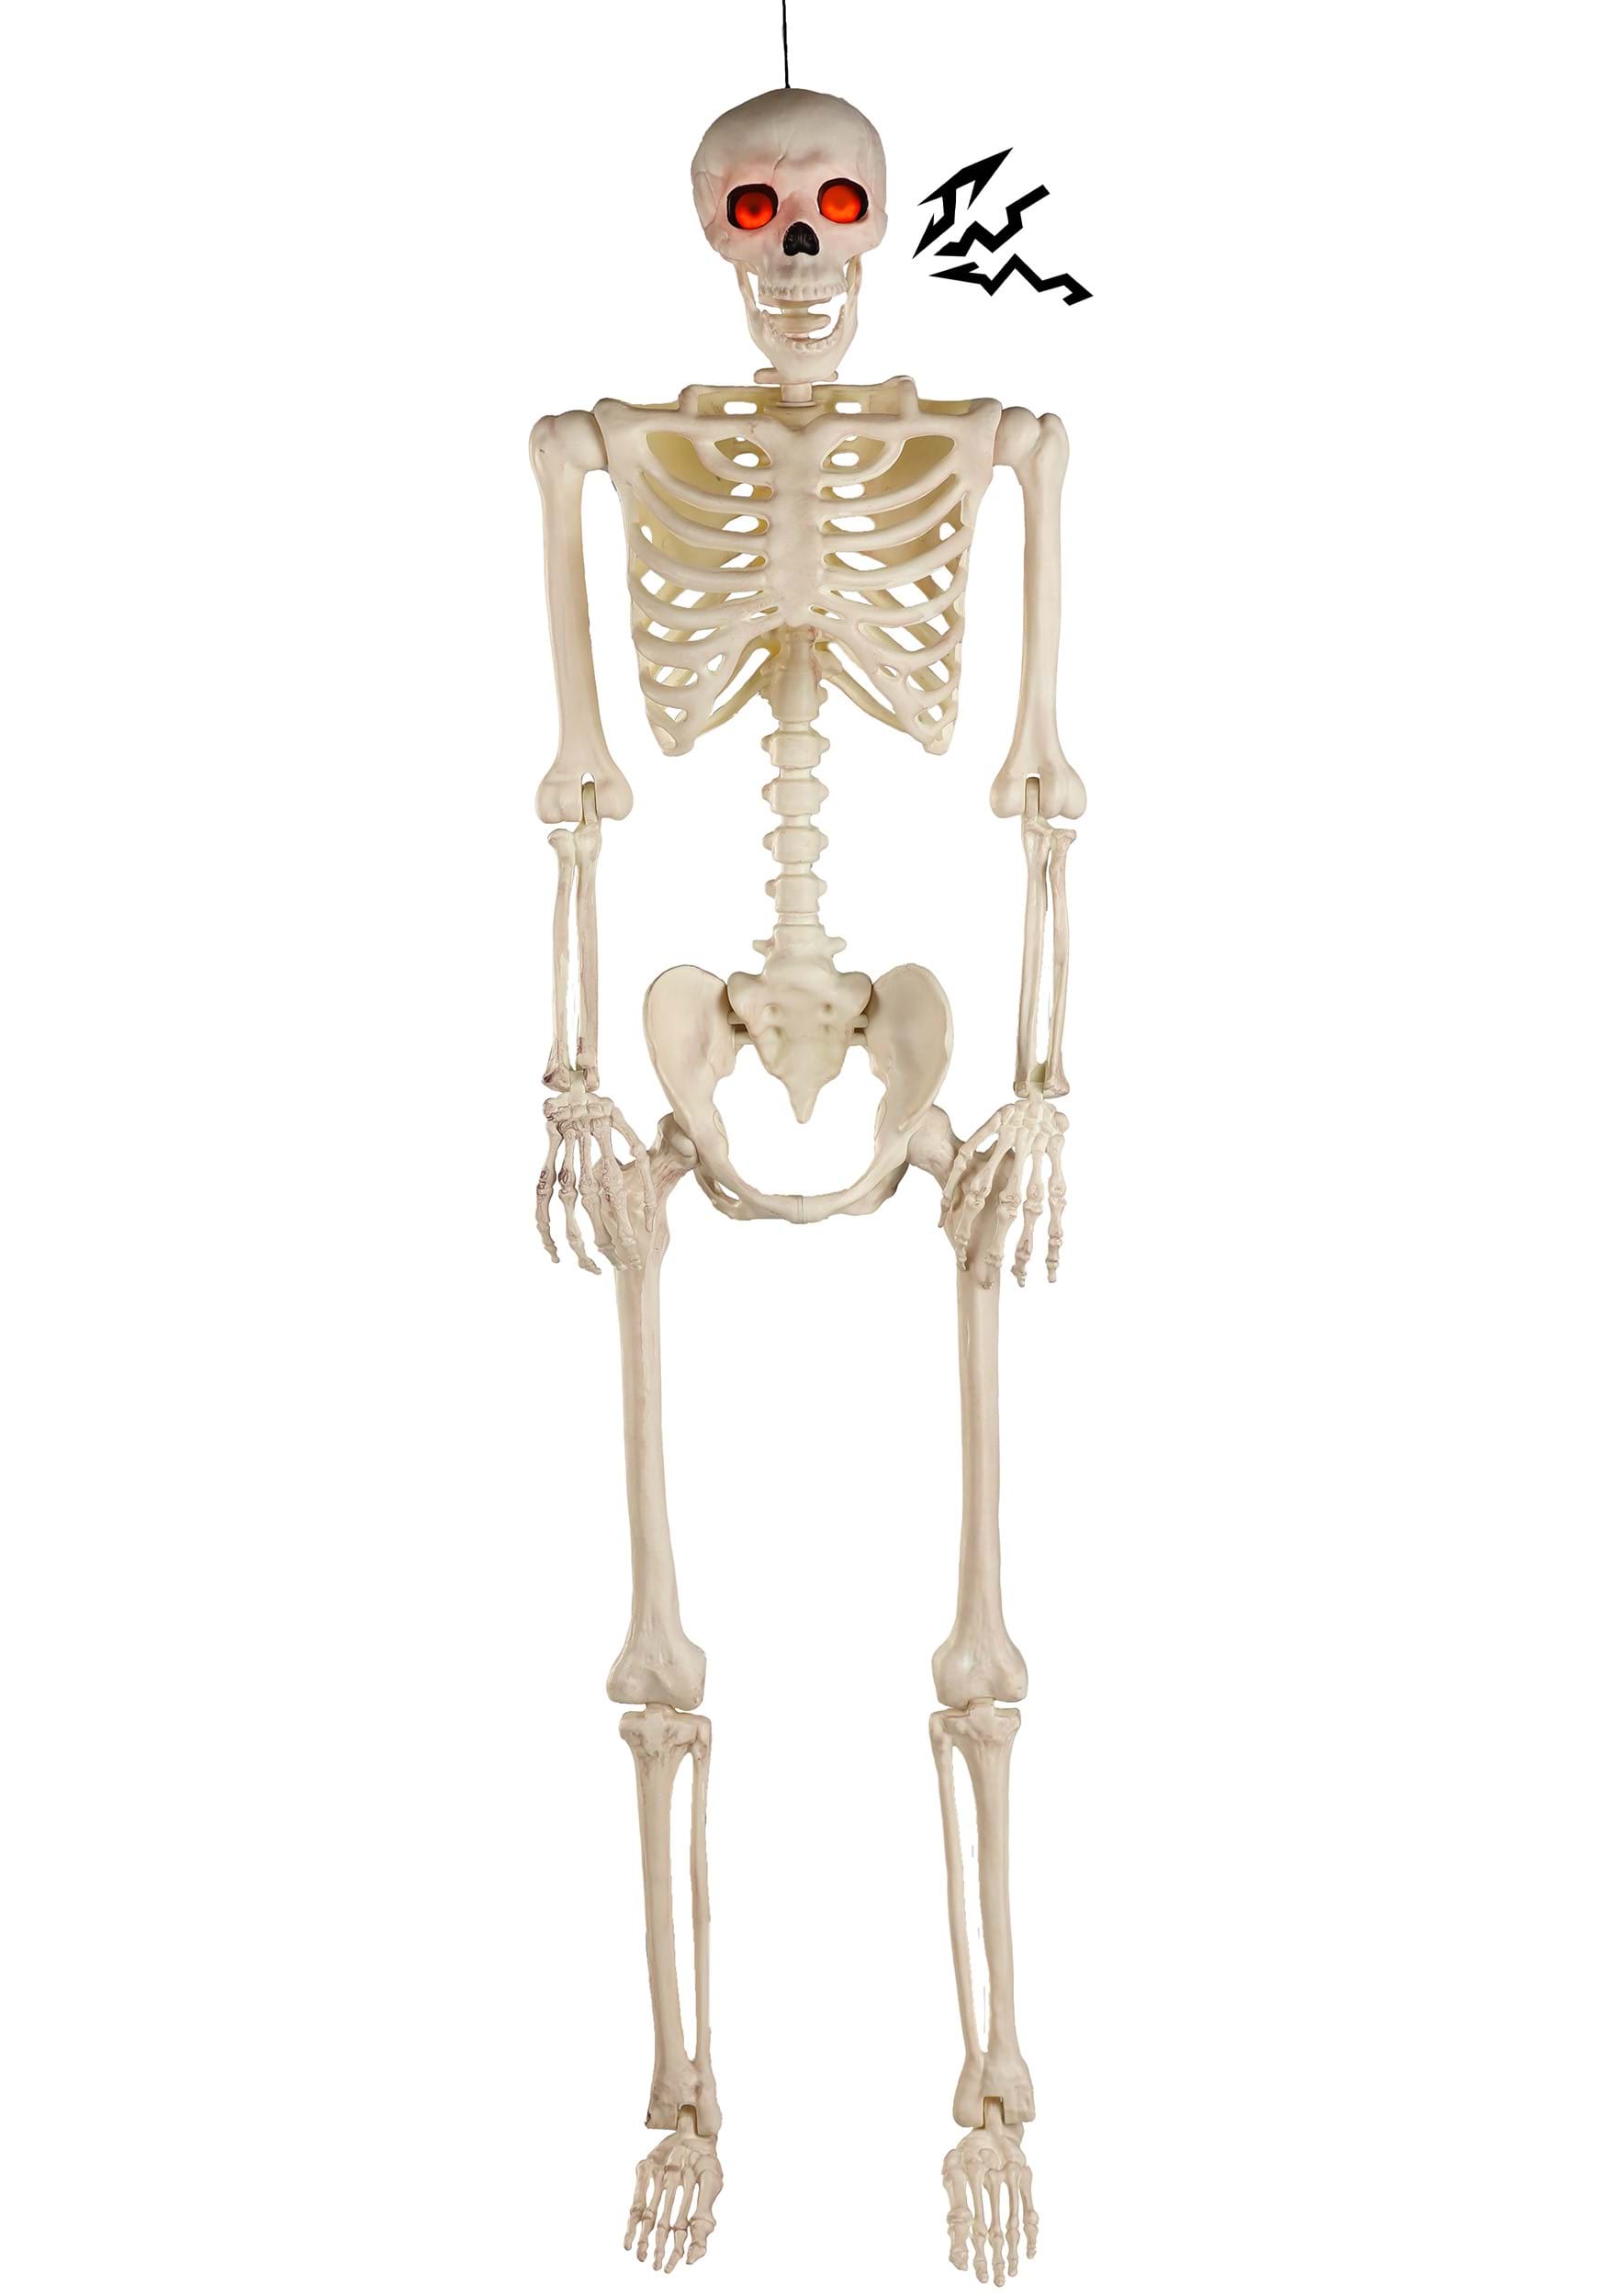 Image of 5FT Deluxe Flaming Light Up Eyes & Talking Skeleton Halloween Prop | Skeleton Decorations ID SNW83224LOK3UCO-0-ST